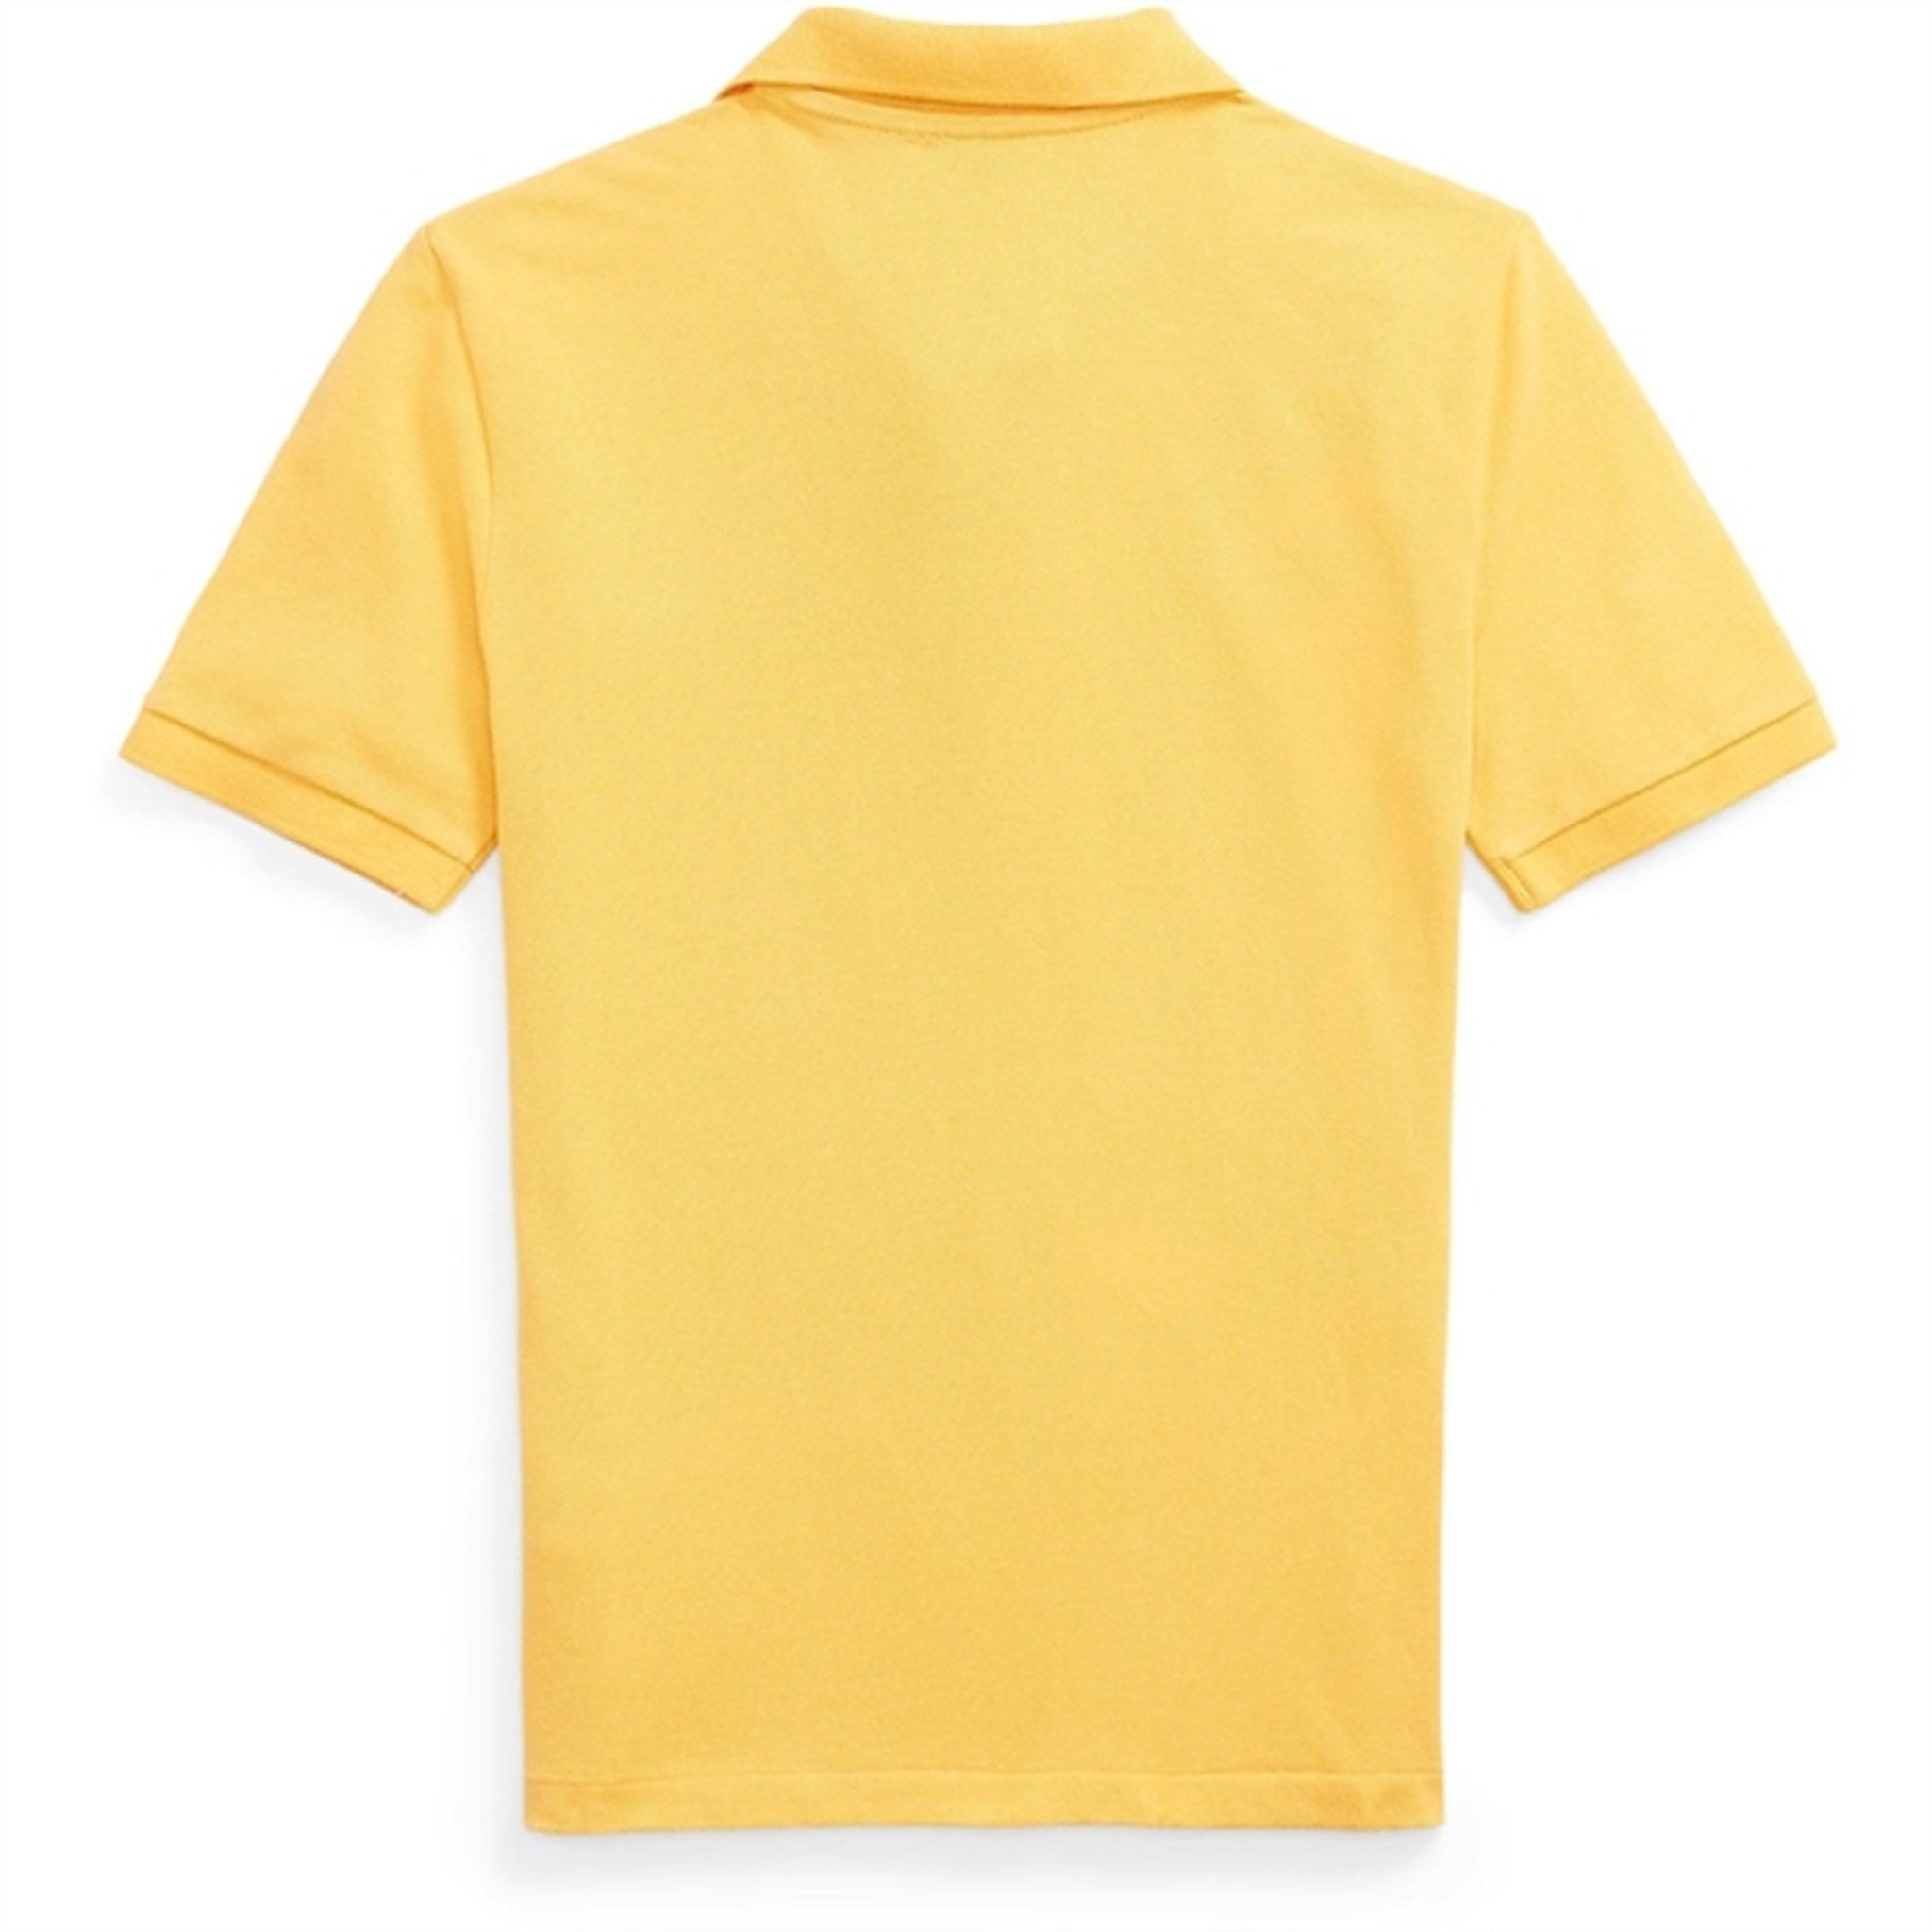 Polo Ralph Lauren Boys Polo Shirt Chrome Yellow 2